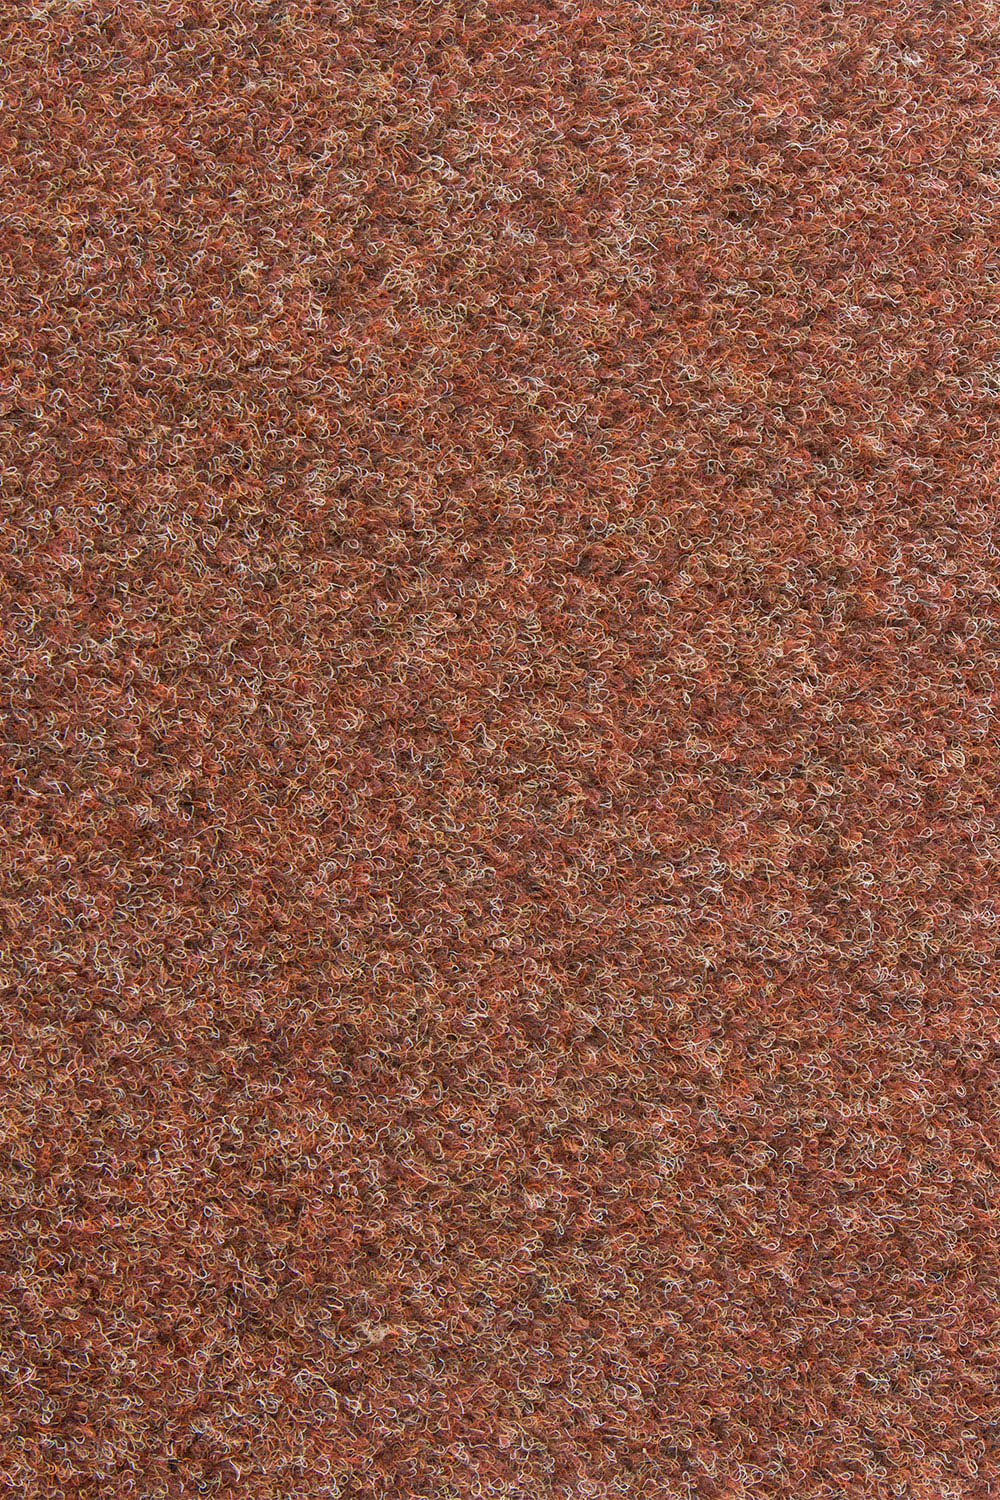 Metrážový koberec Zero LF 86 400 cm